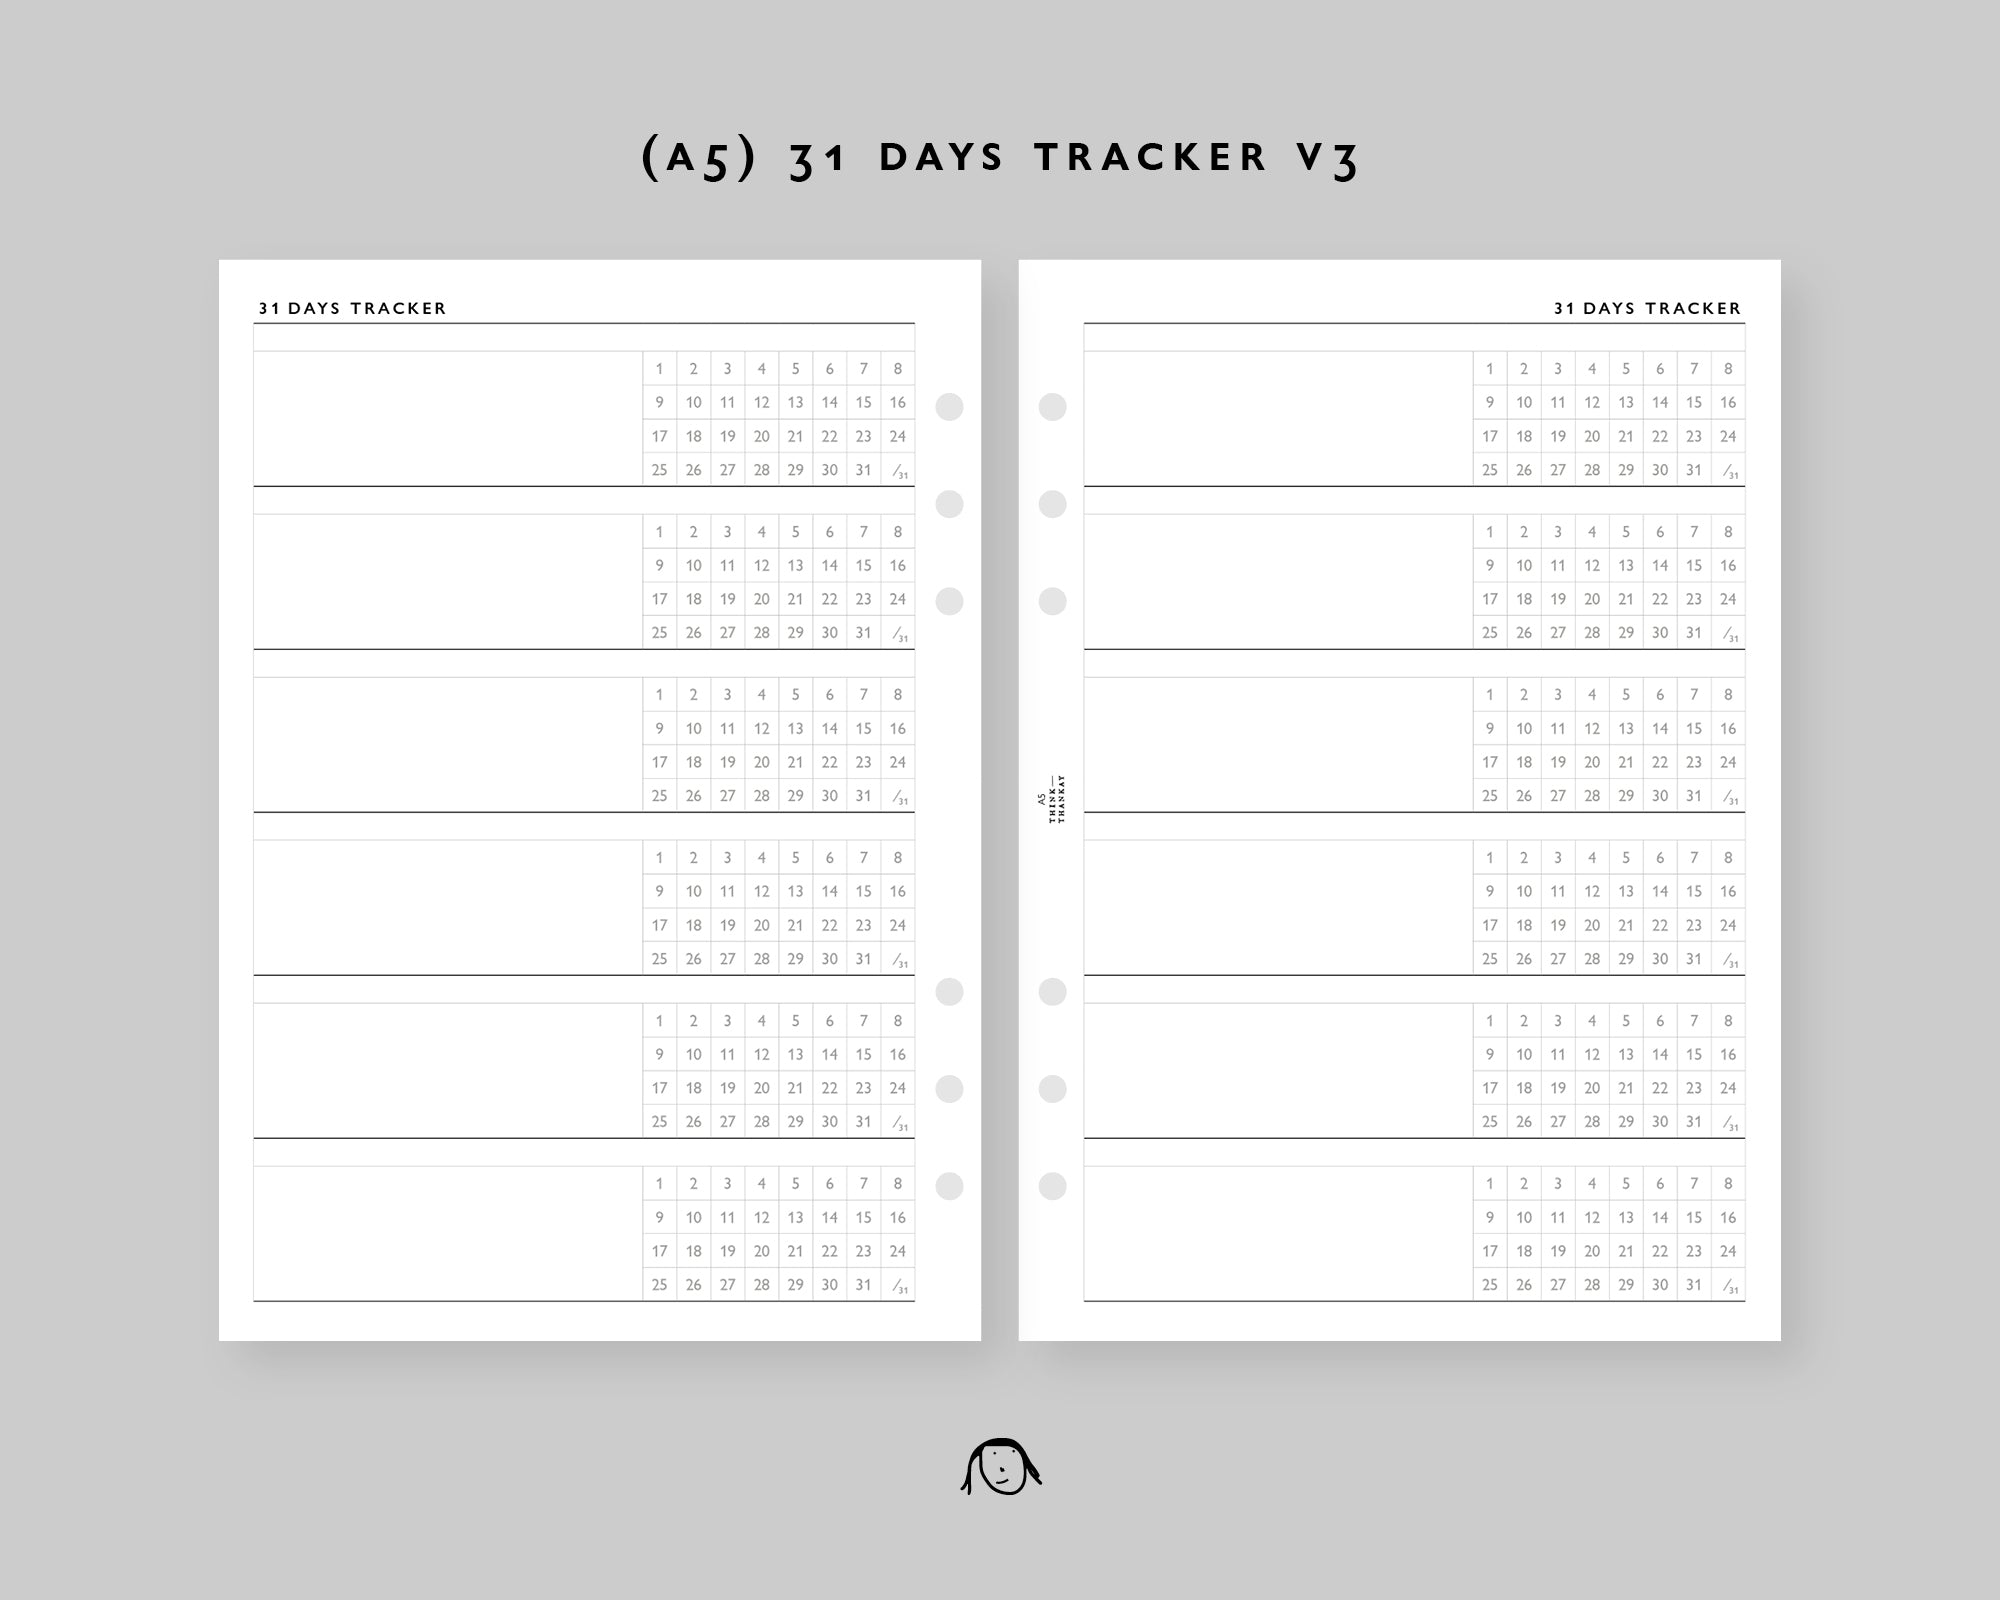 A5E9(A5)-31 Days Tracker V3